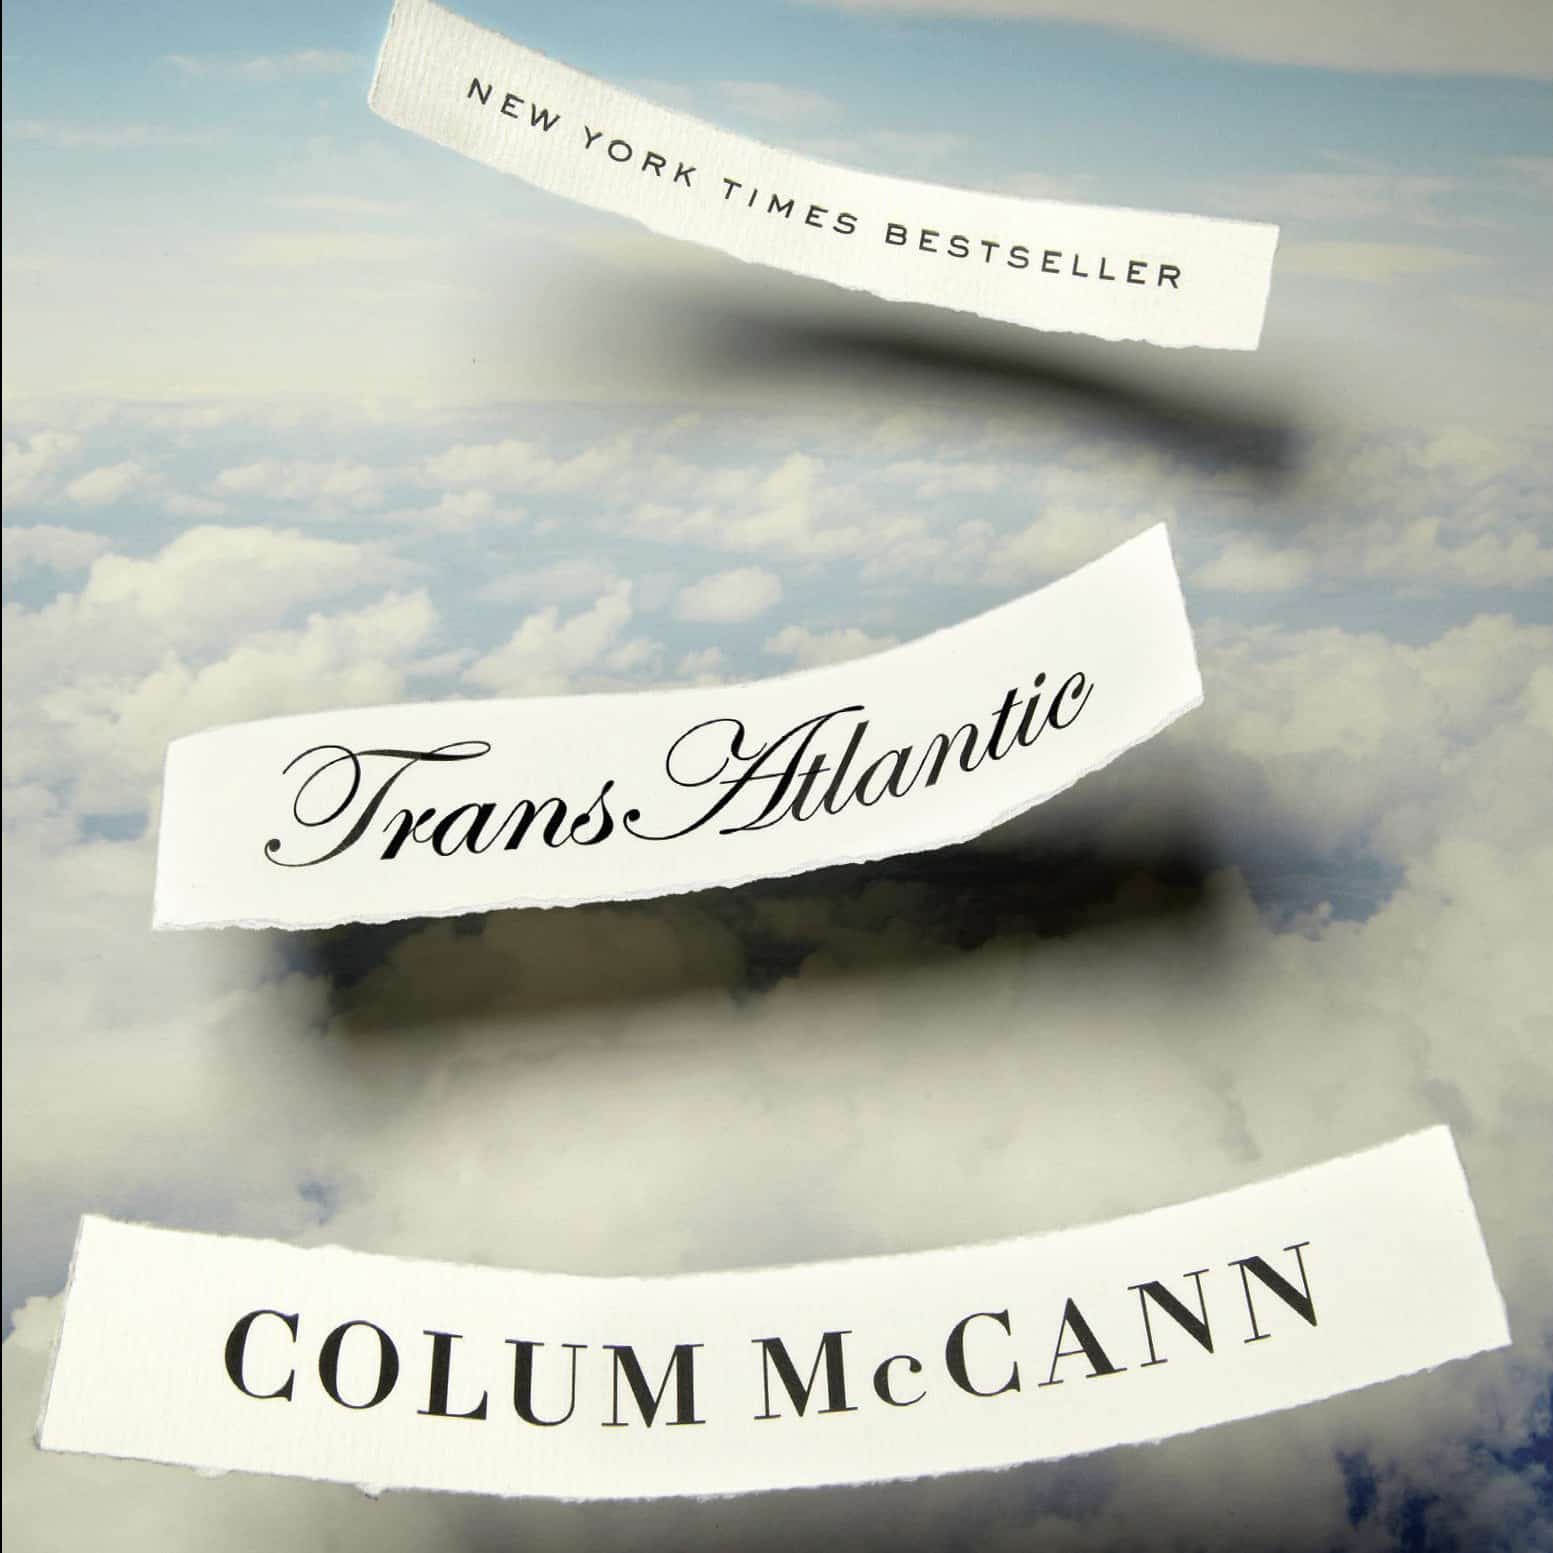 "Transatlantic" by Colum McCann